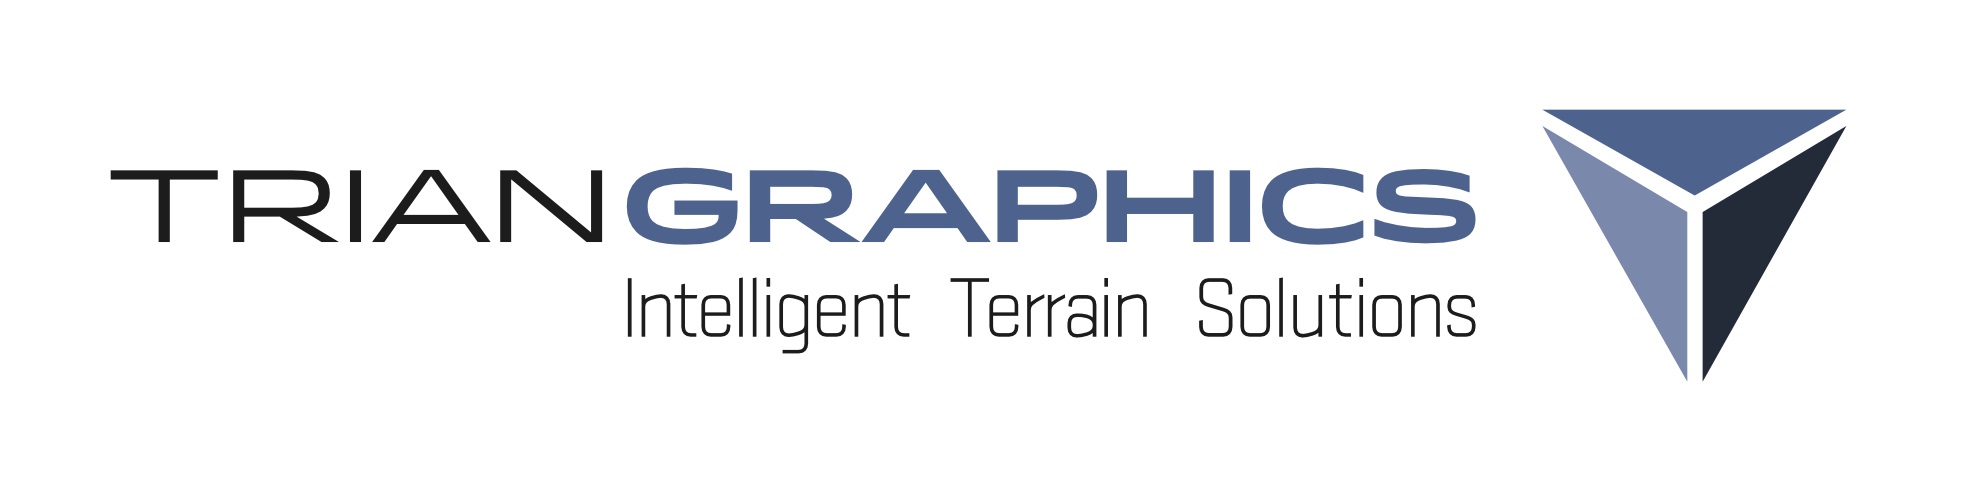 logo_Triangraphics_500